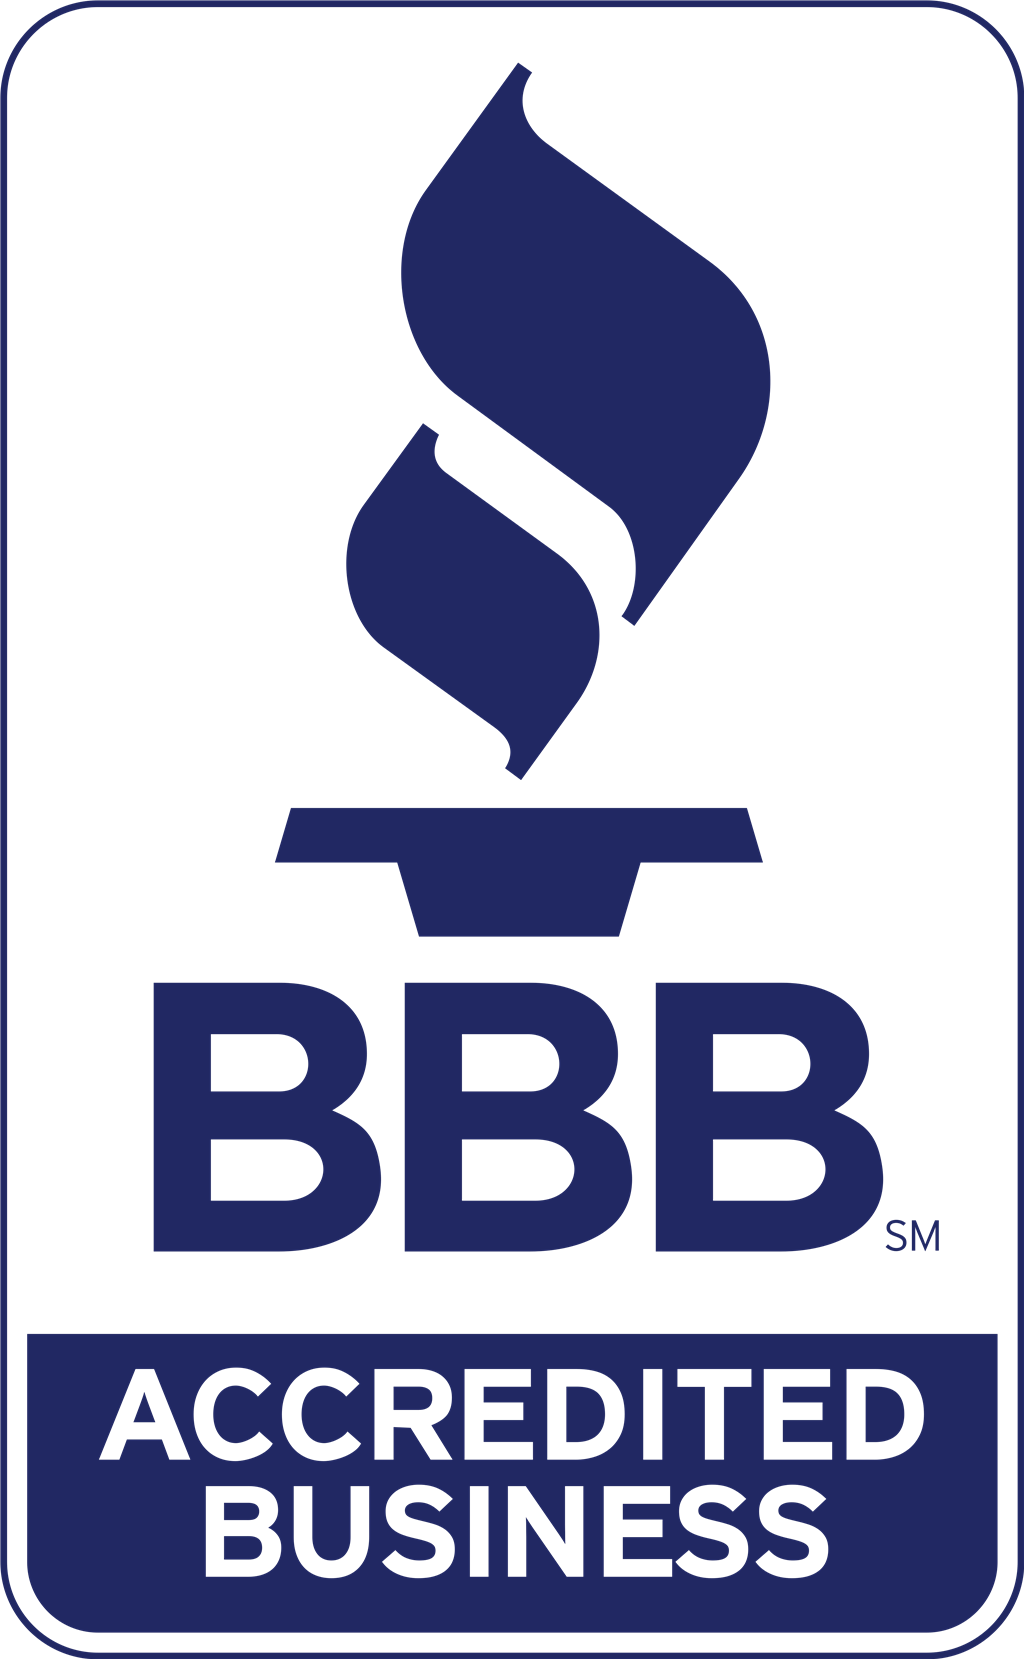 Better Business Bureau logotype, transparent .png, medium, large